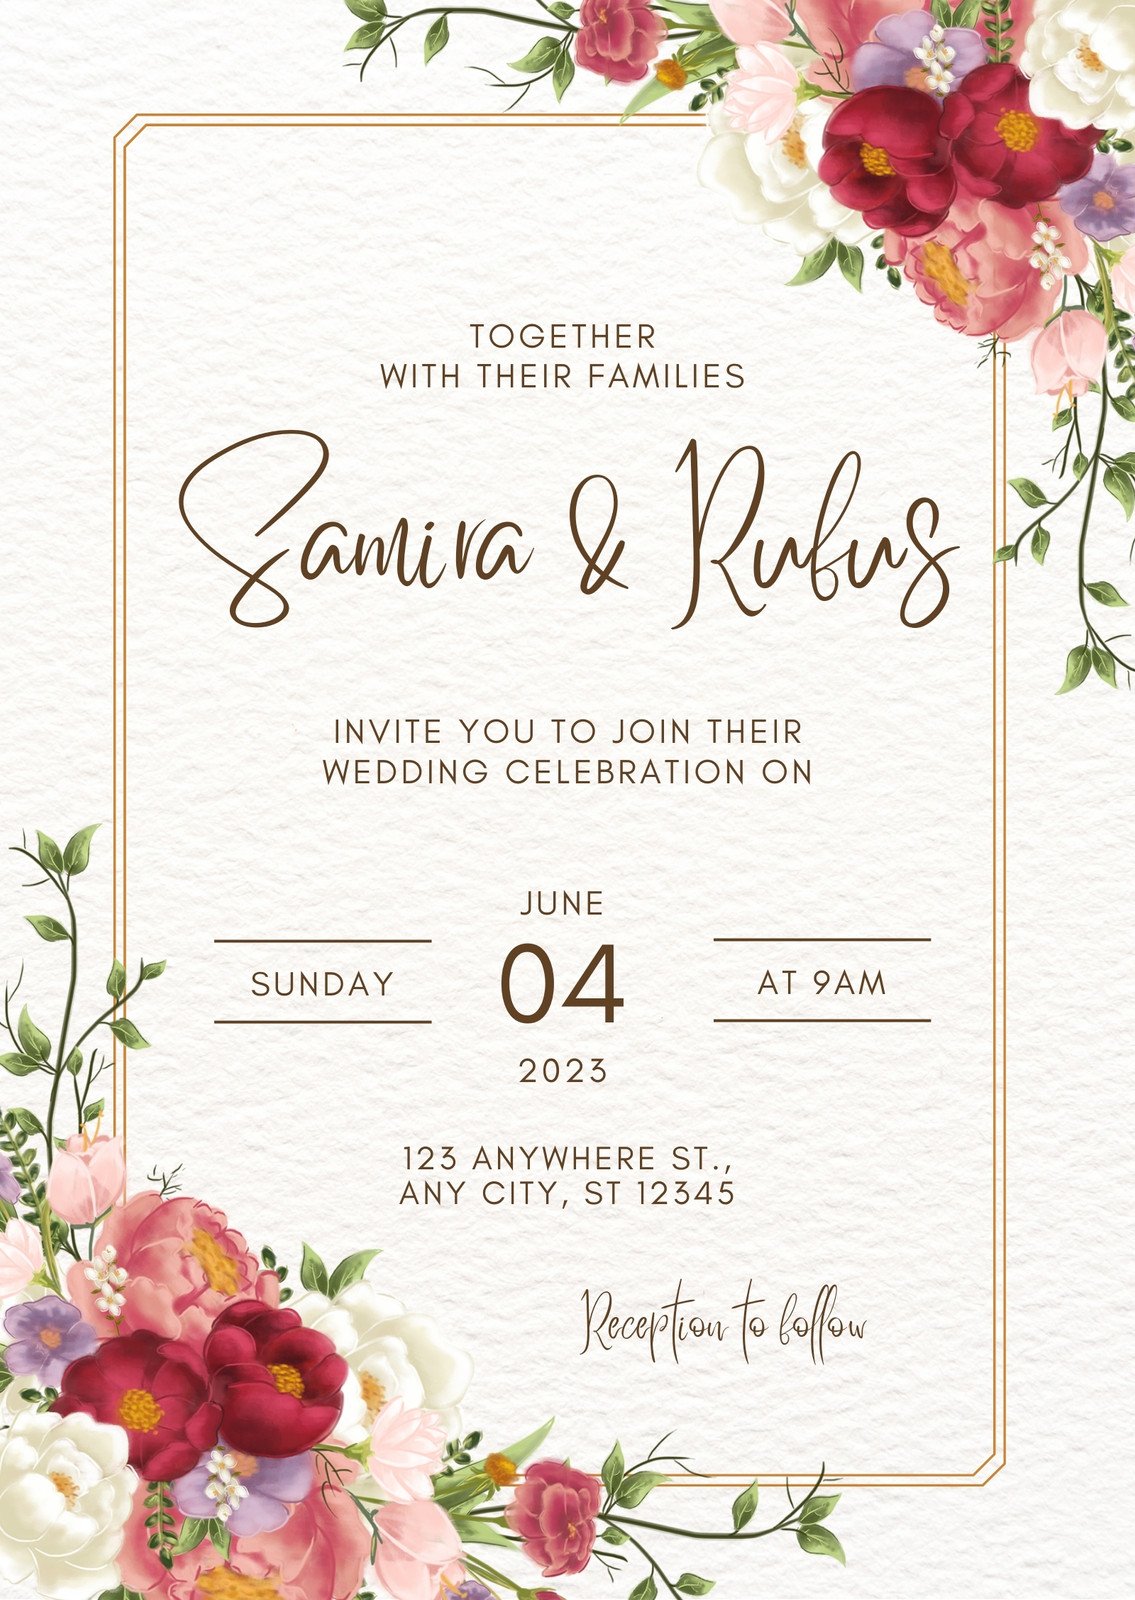 Wedding invitation ideas